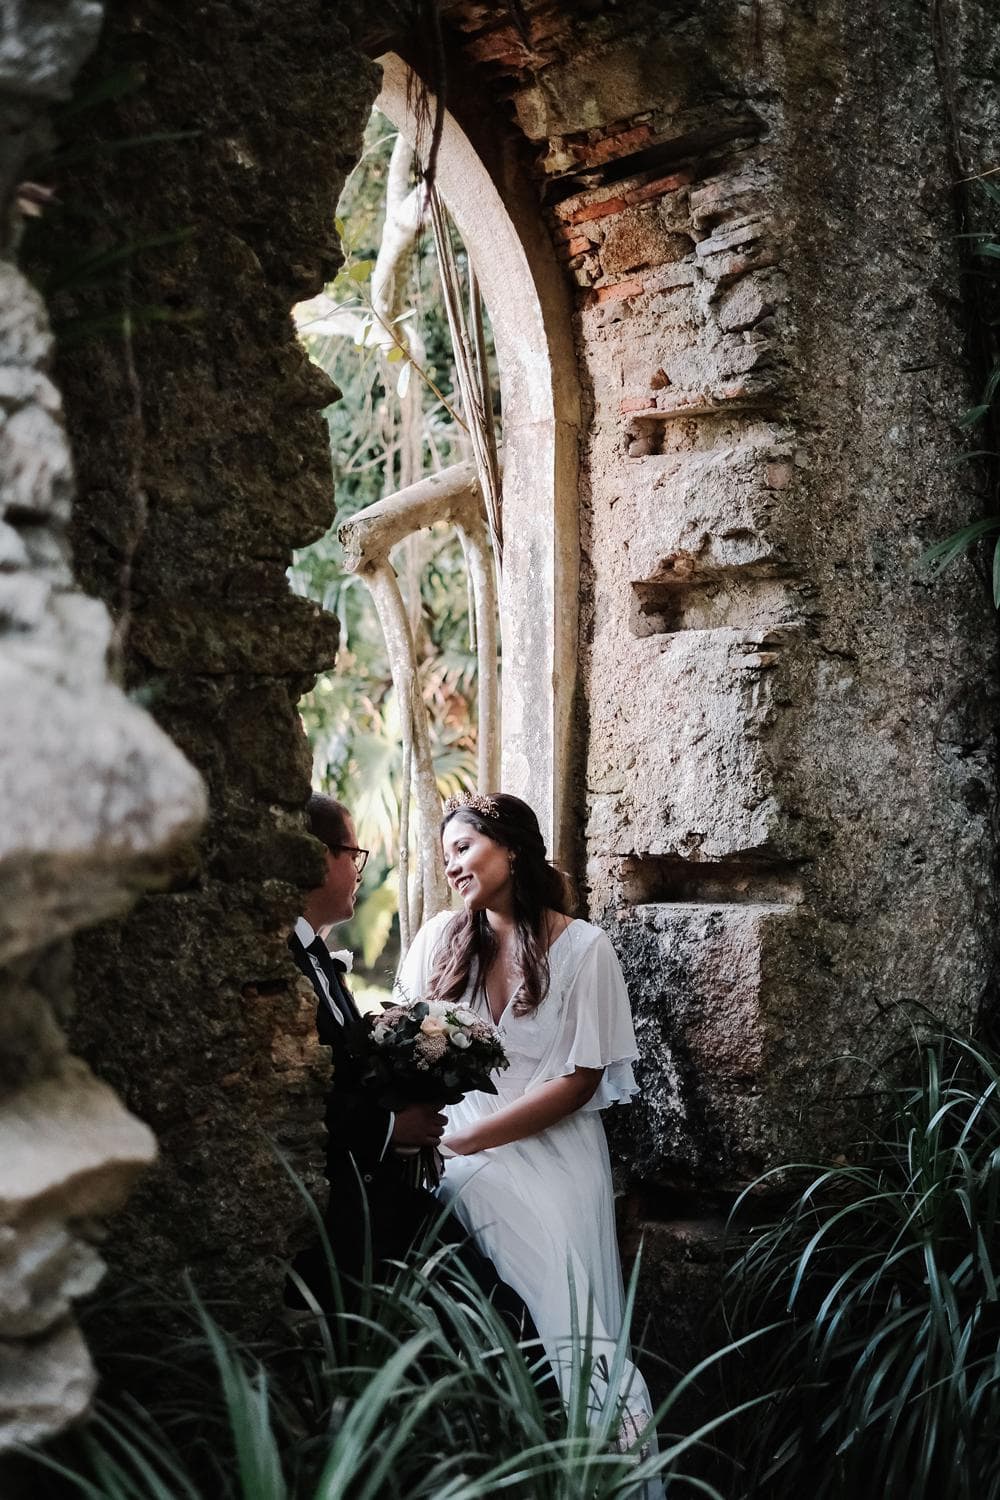 chapel ruins at Monserrate Palace #sintrawedding #outdoorwedding #sintraelopement #portugalphotographer jesuscaballero.com